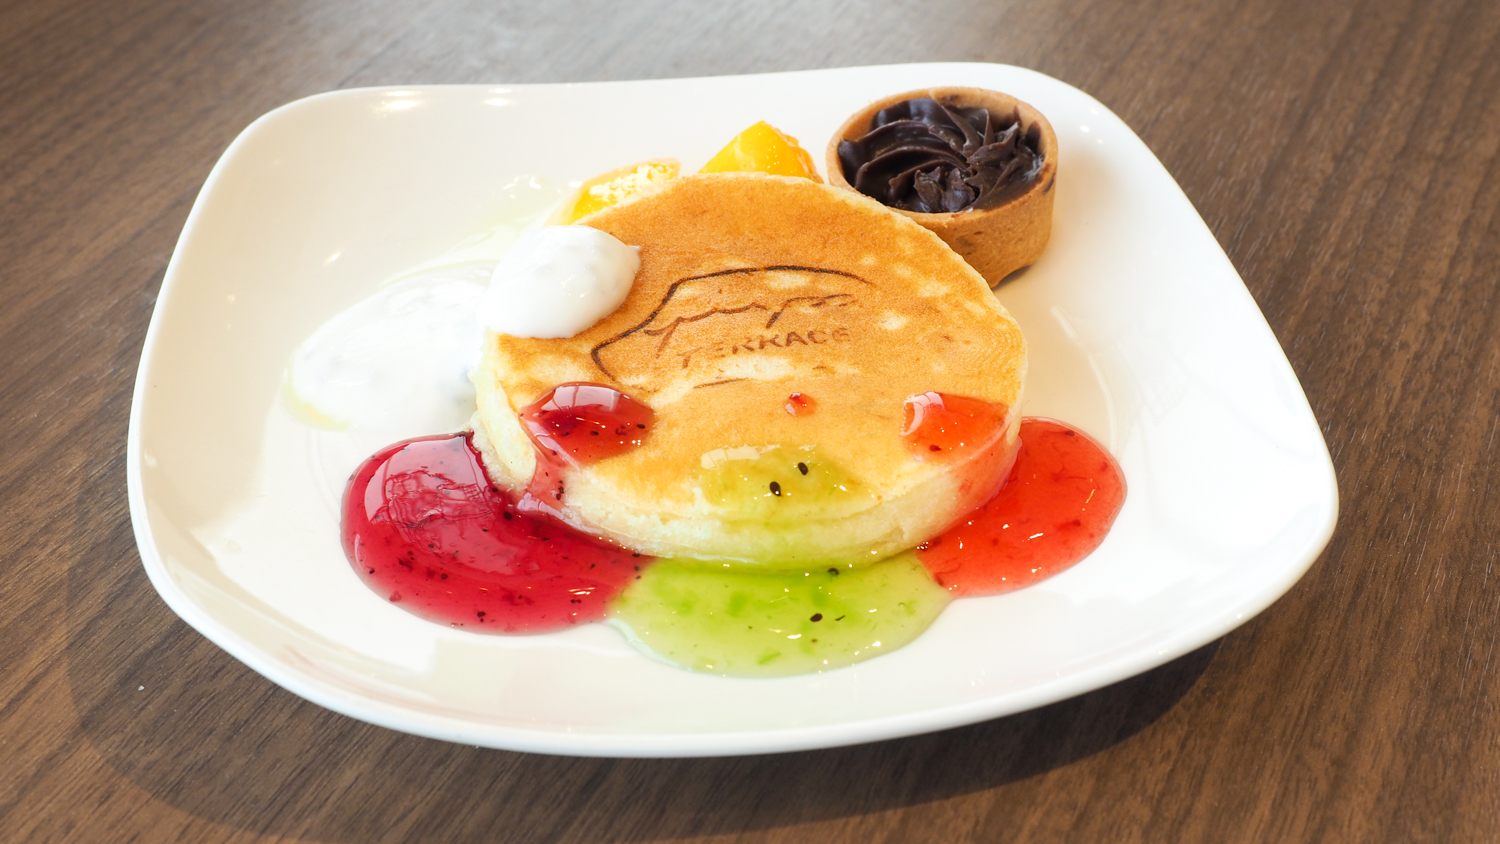 Pancake with various toppings